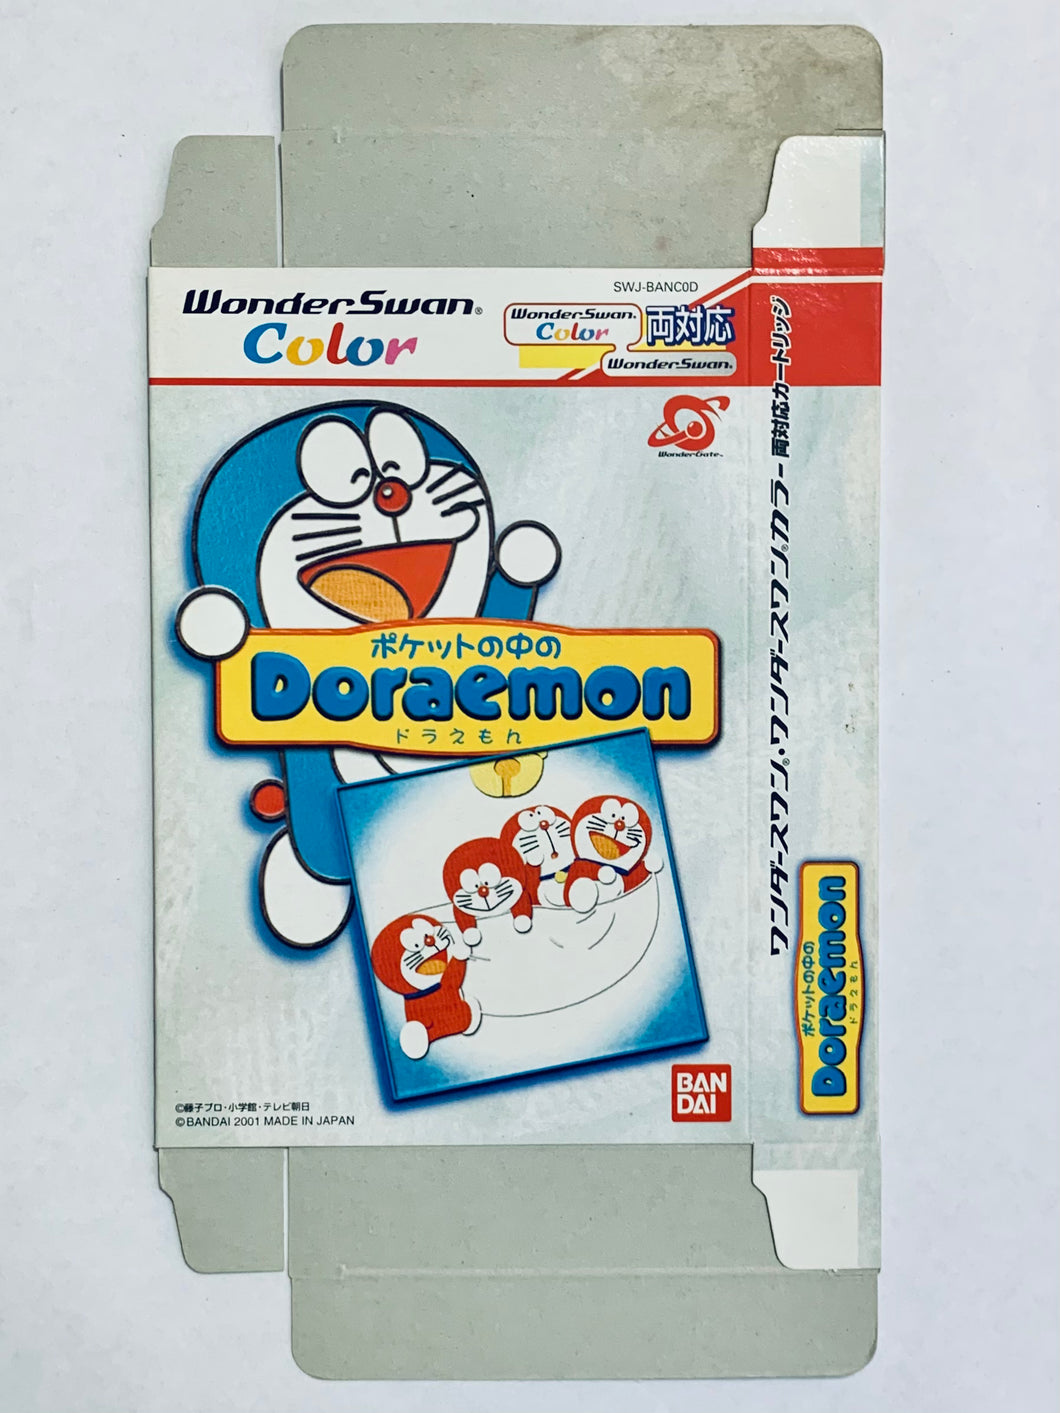 Pocket no Naka no Doraemon - WonderSwan Color - WSC - JP - Box Only (SWJ-BANC0D)